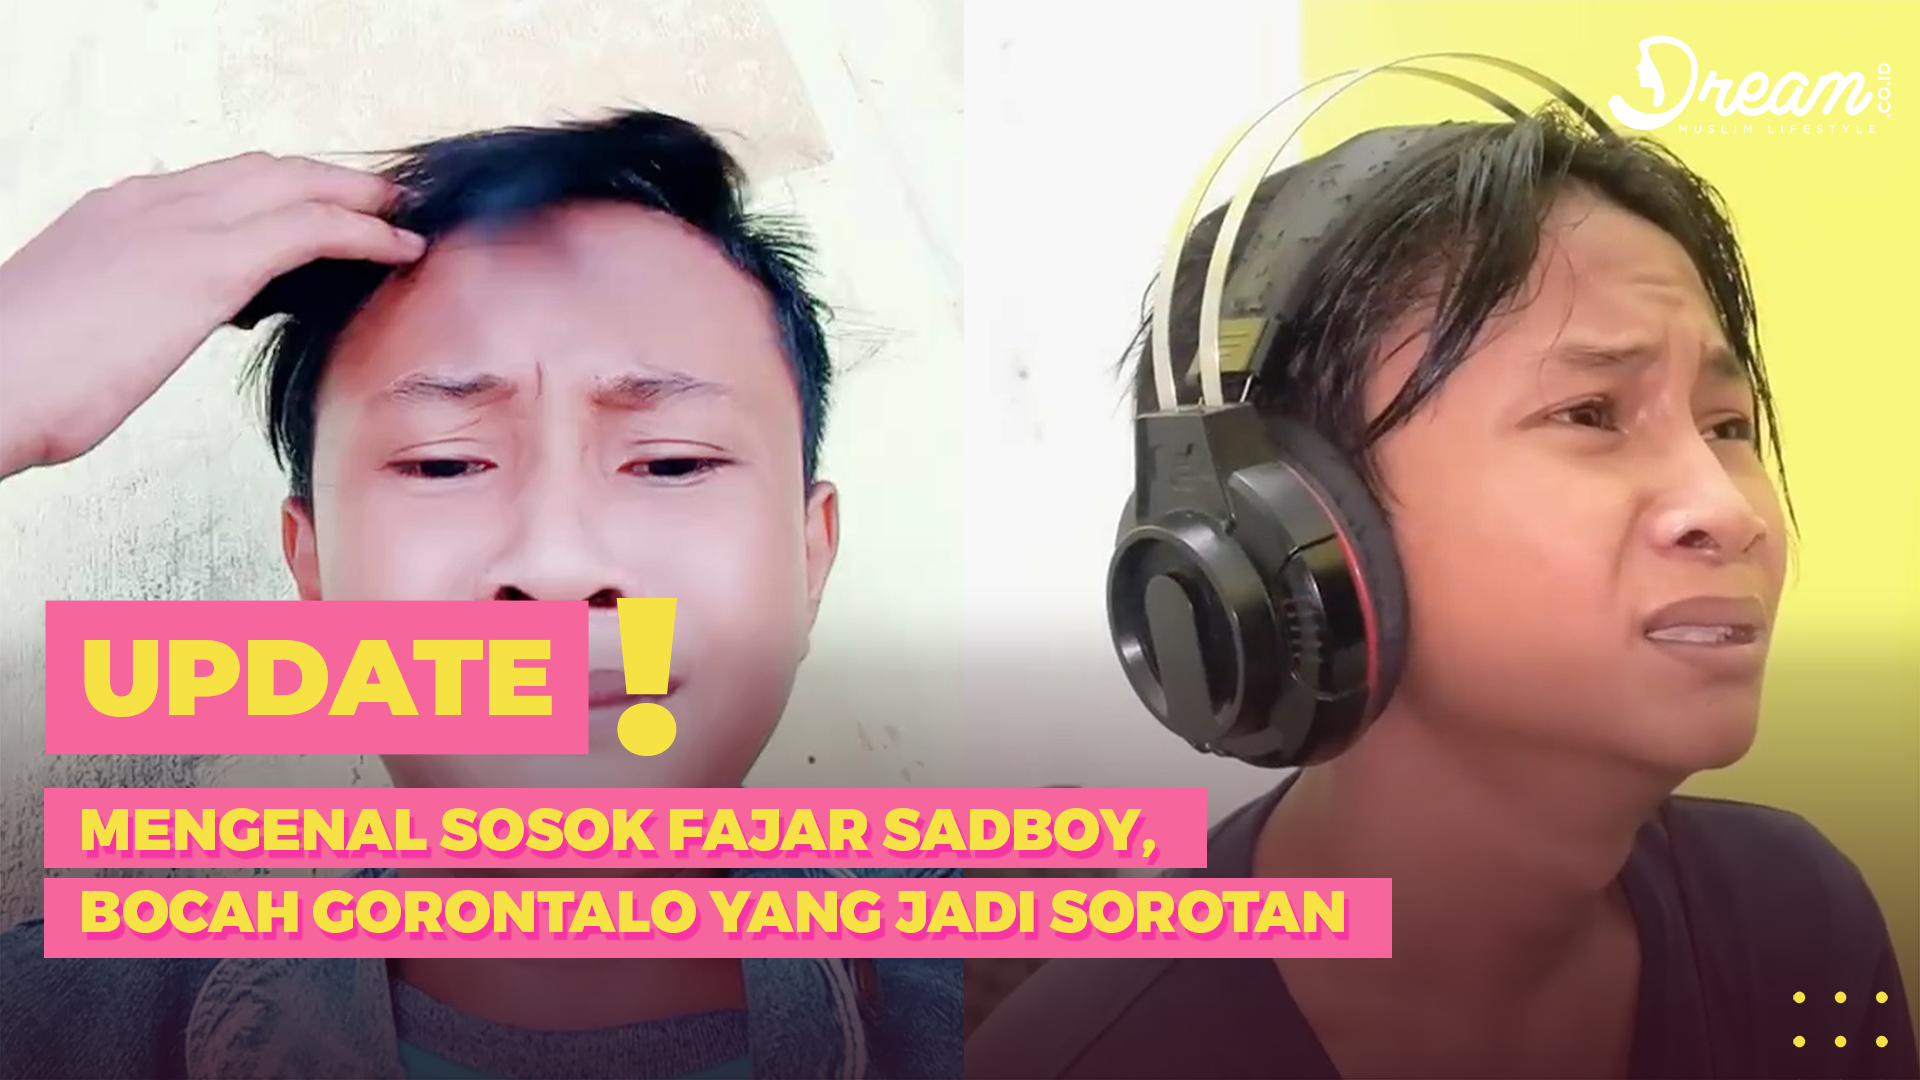 Mengenal Sosok Fajar Sadboy, Bocah Gorontalo yang jadi Sorotan